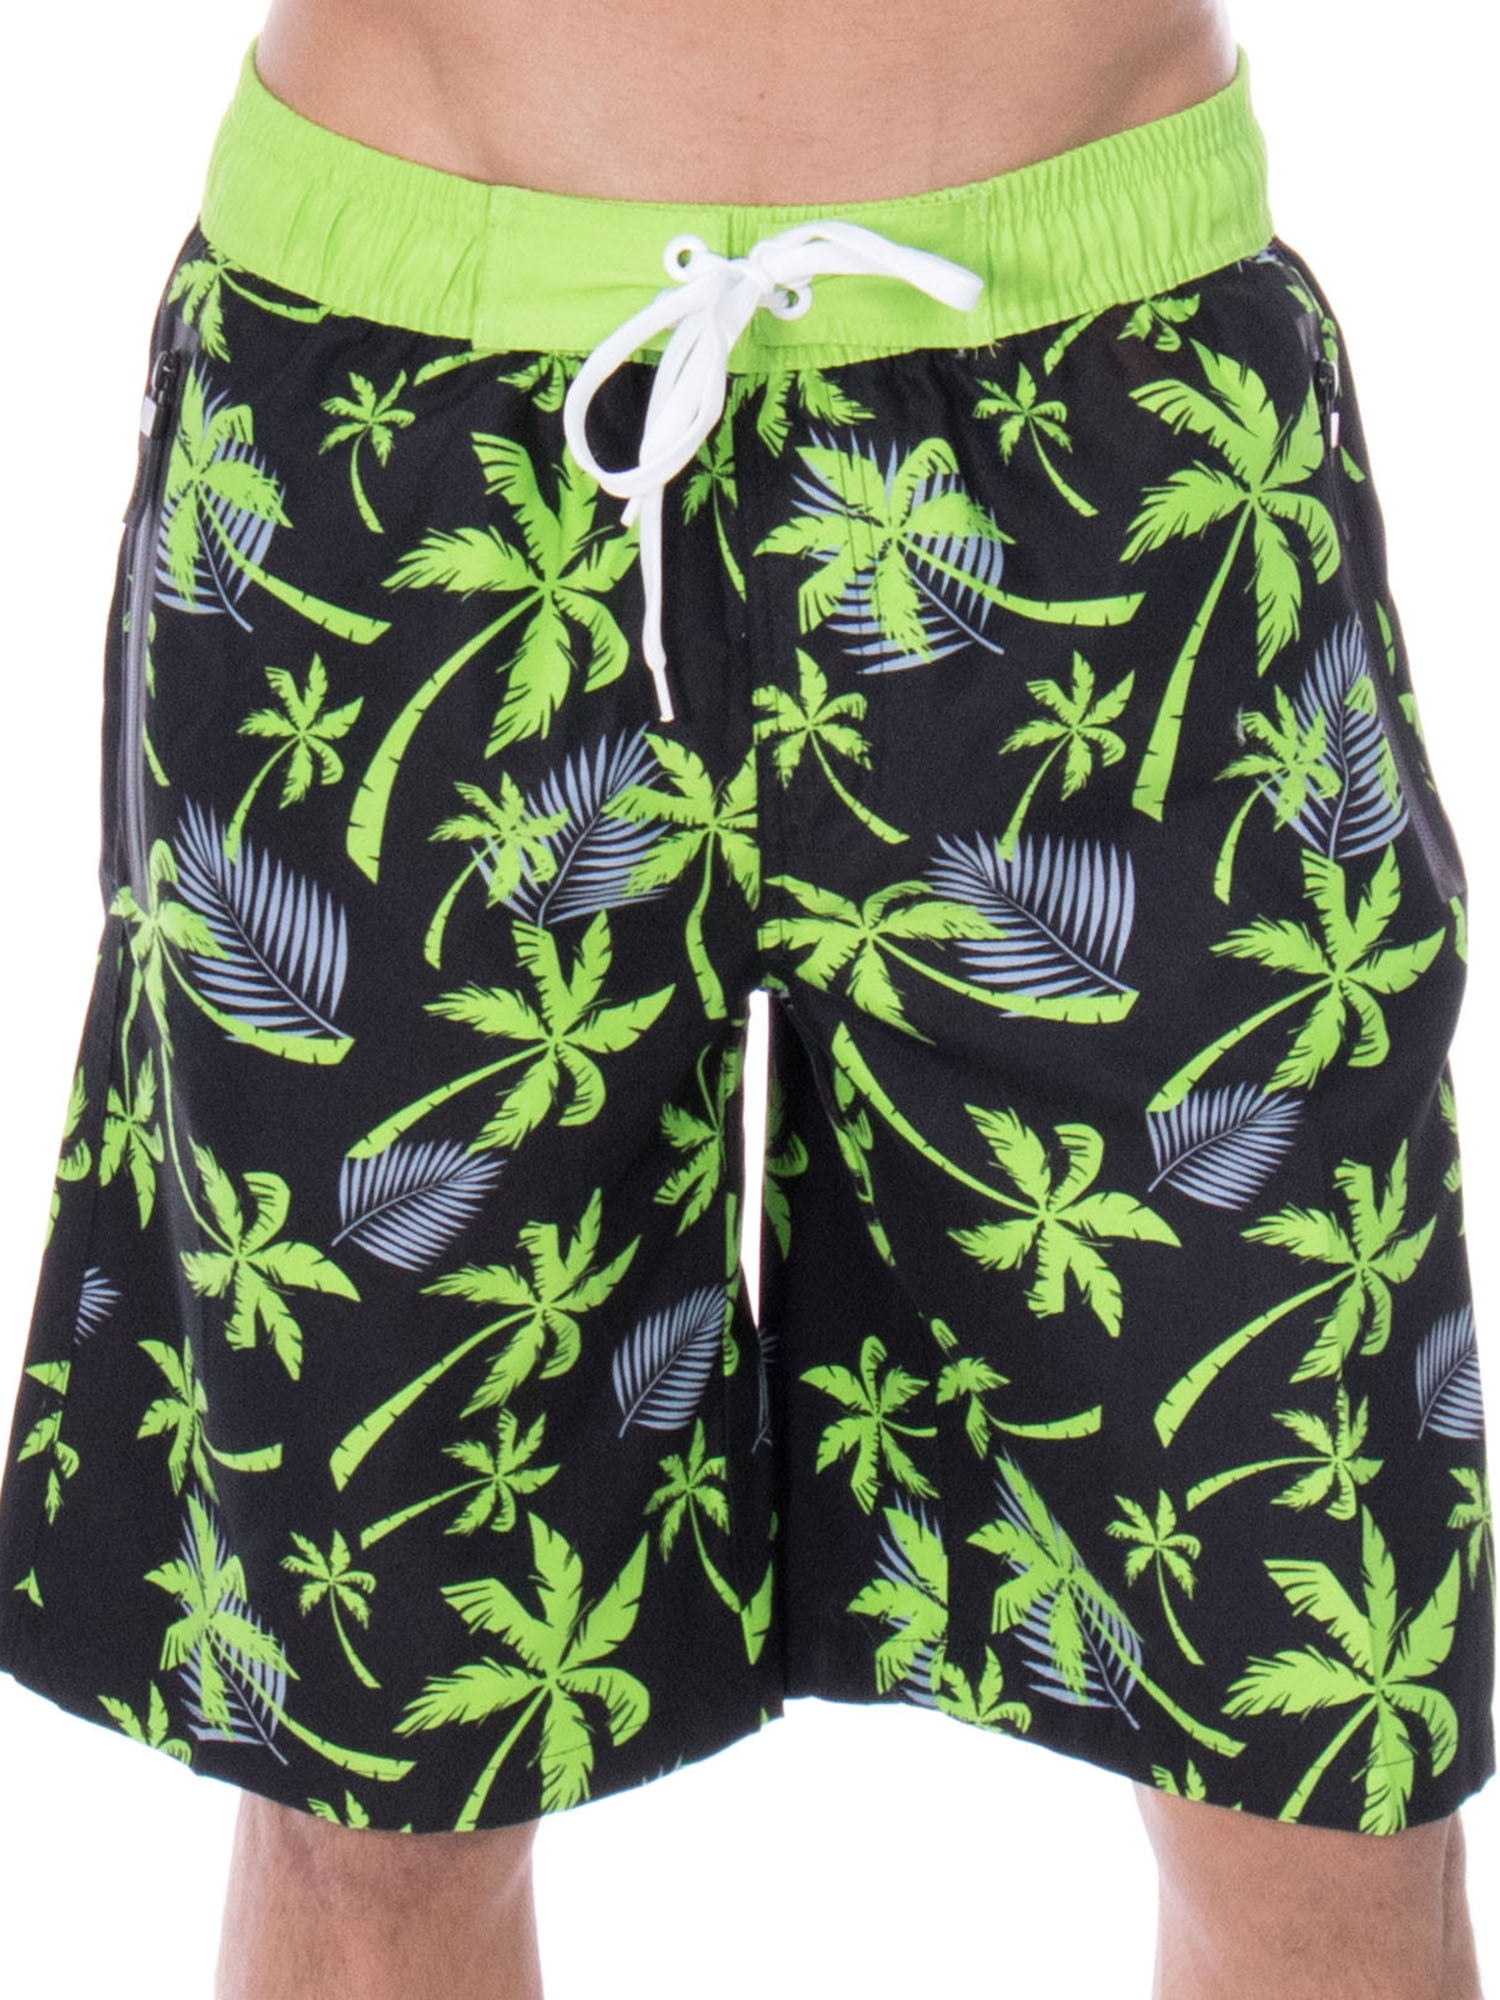 Men's Swim Trunks Mesh Lining Beachwear Board Shorts with Pockets,Large ...